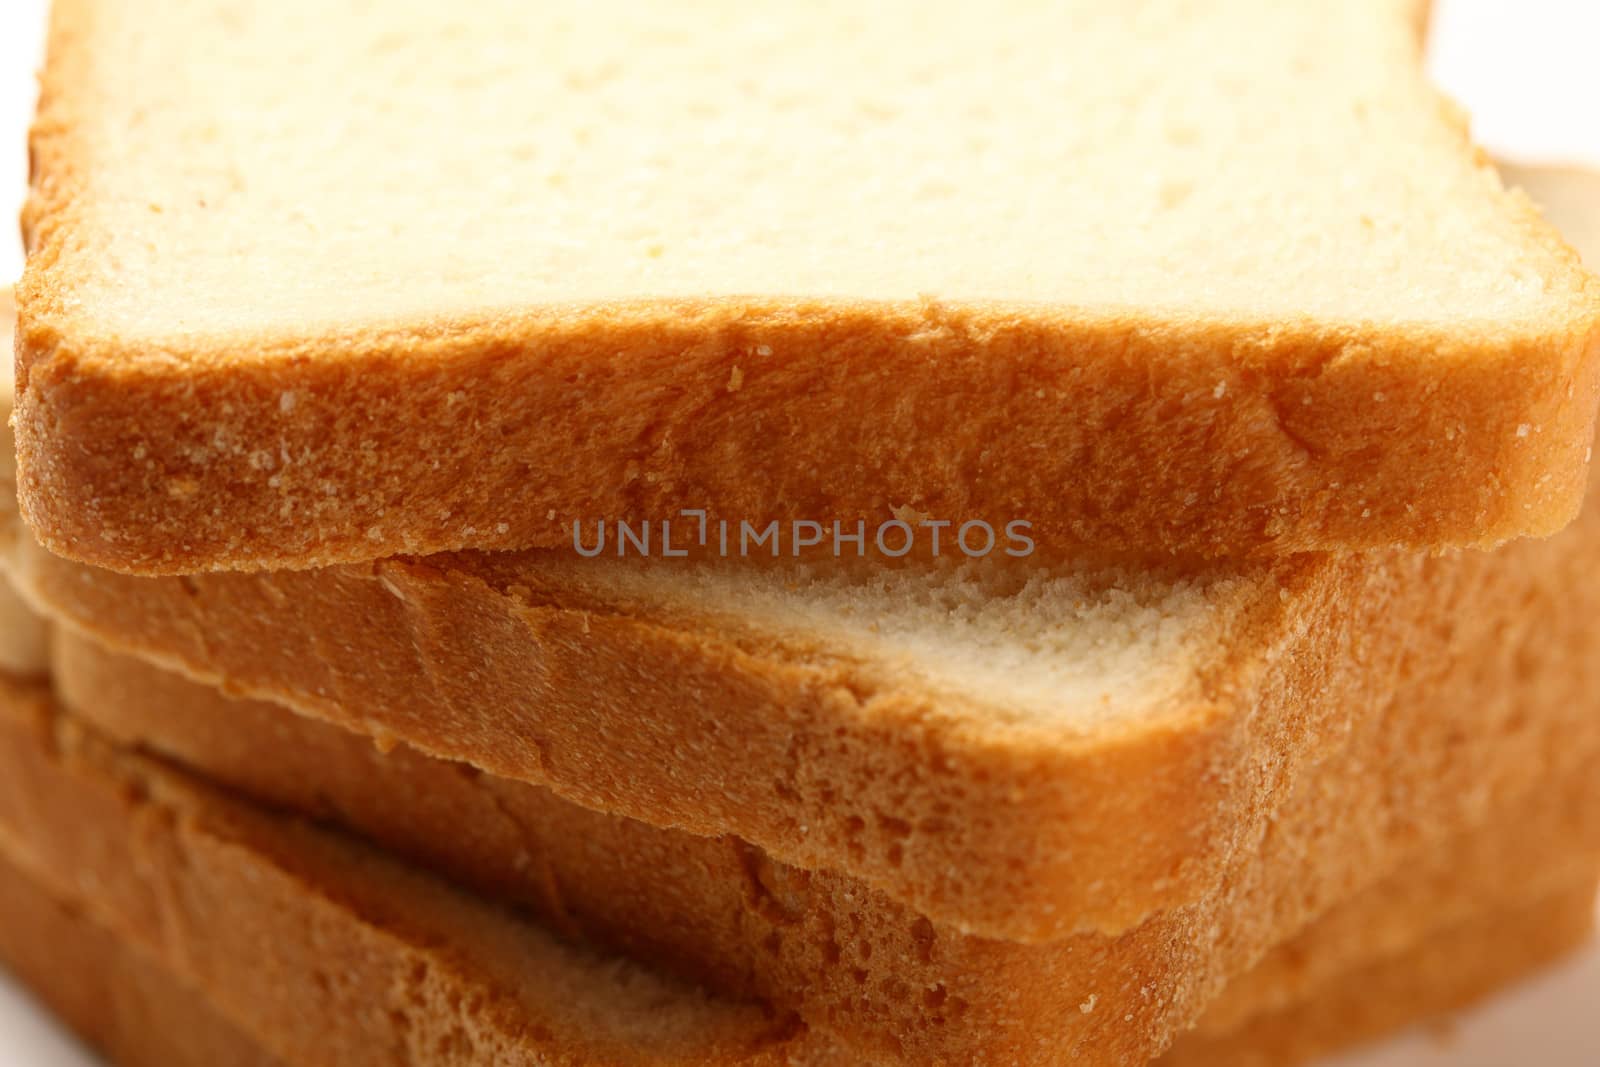 Bread slices on white background by Garsya